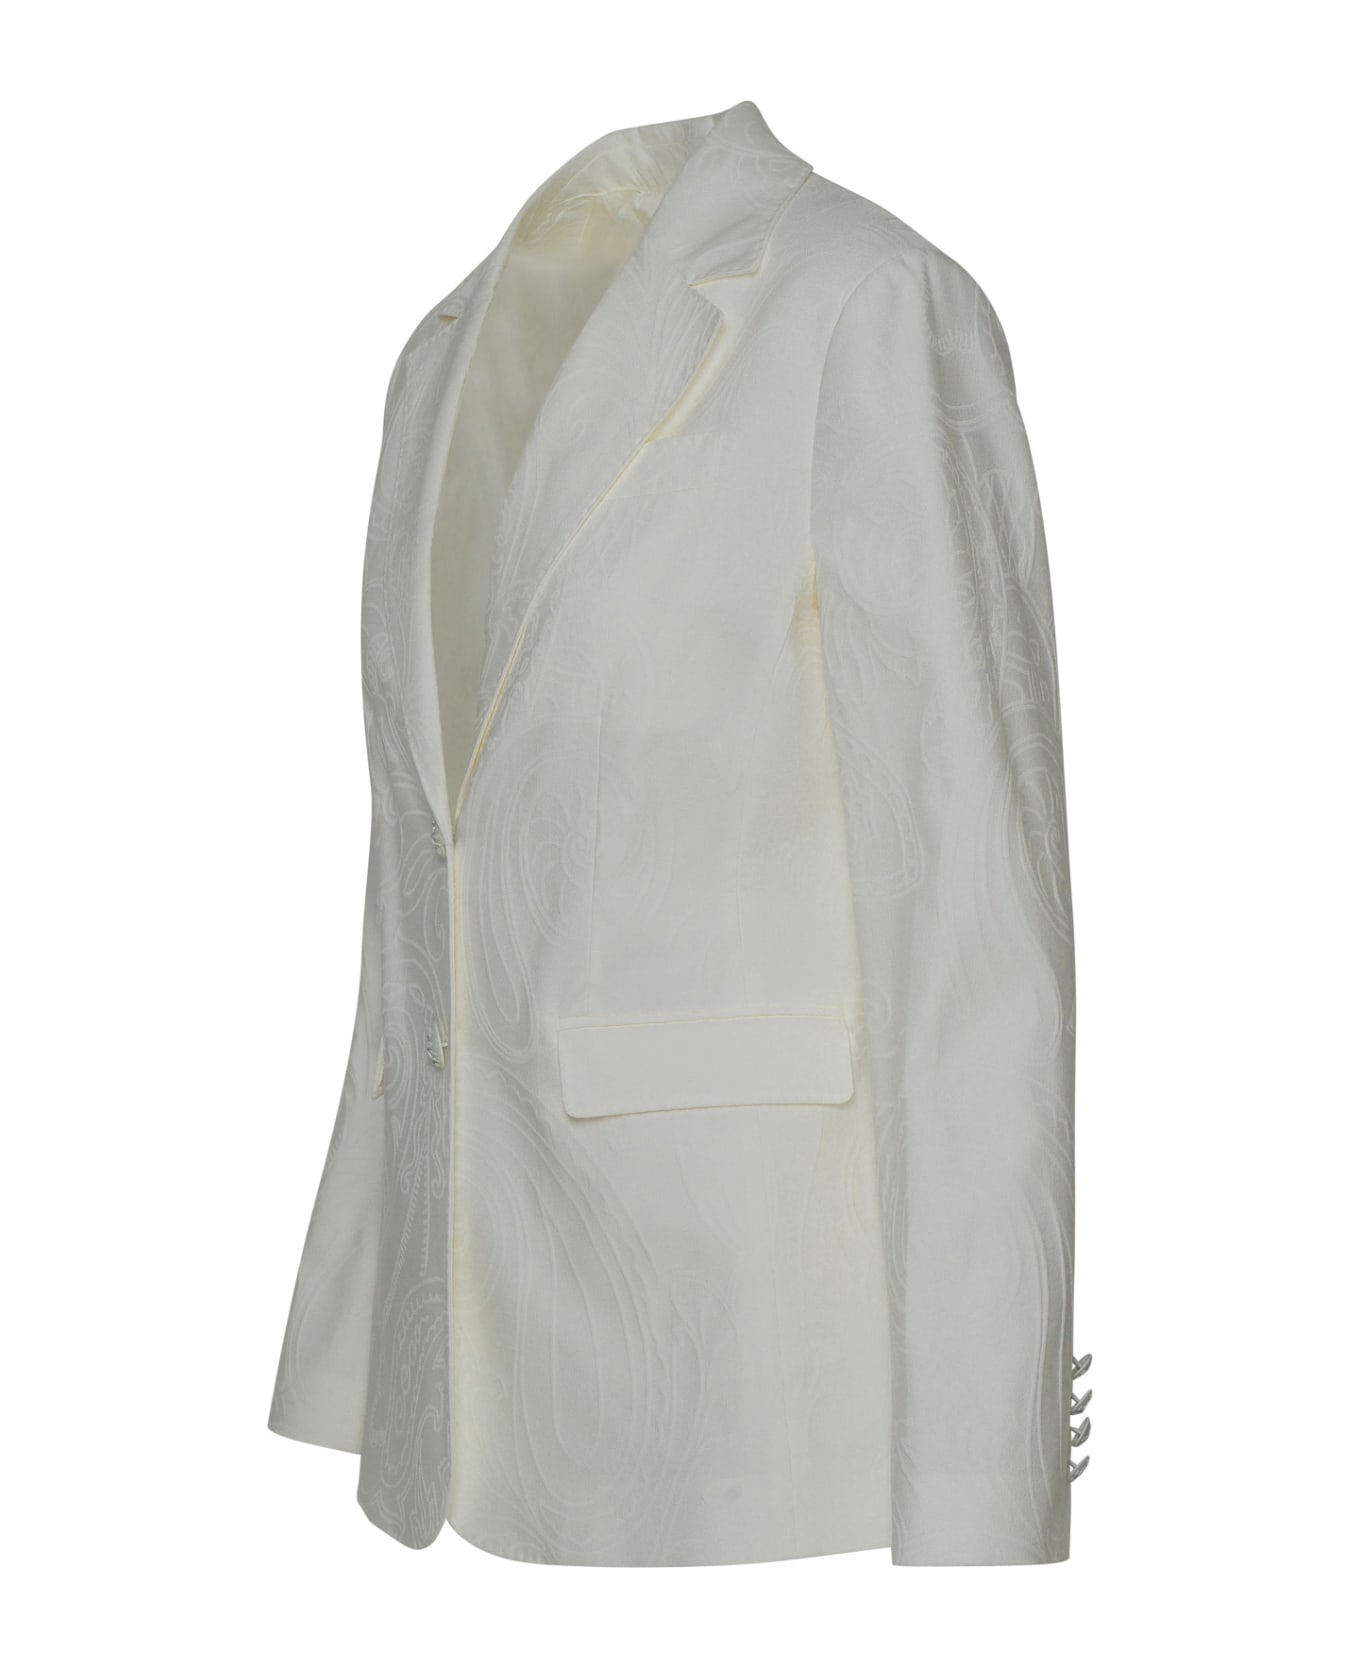 Etro Ivory Cotton Blend Blazer Jacket - Bianco ブレザー